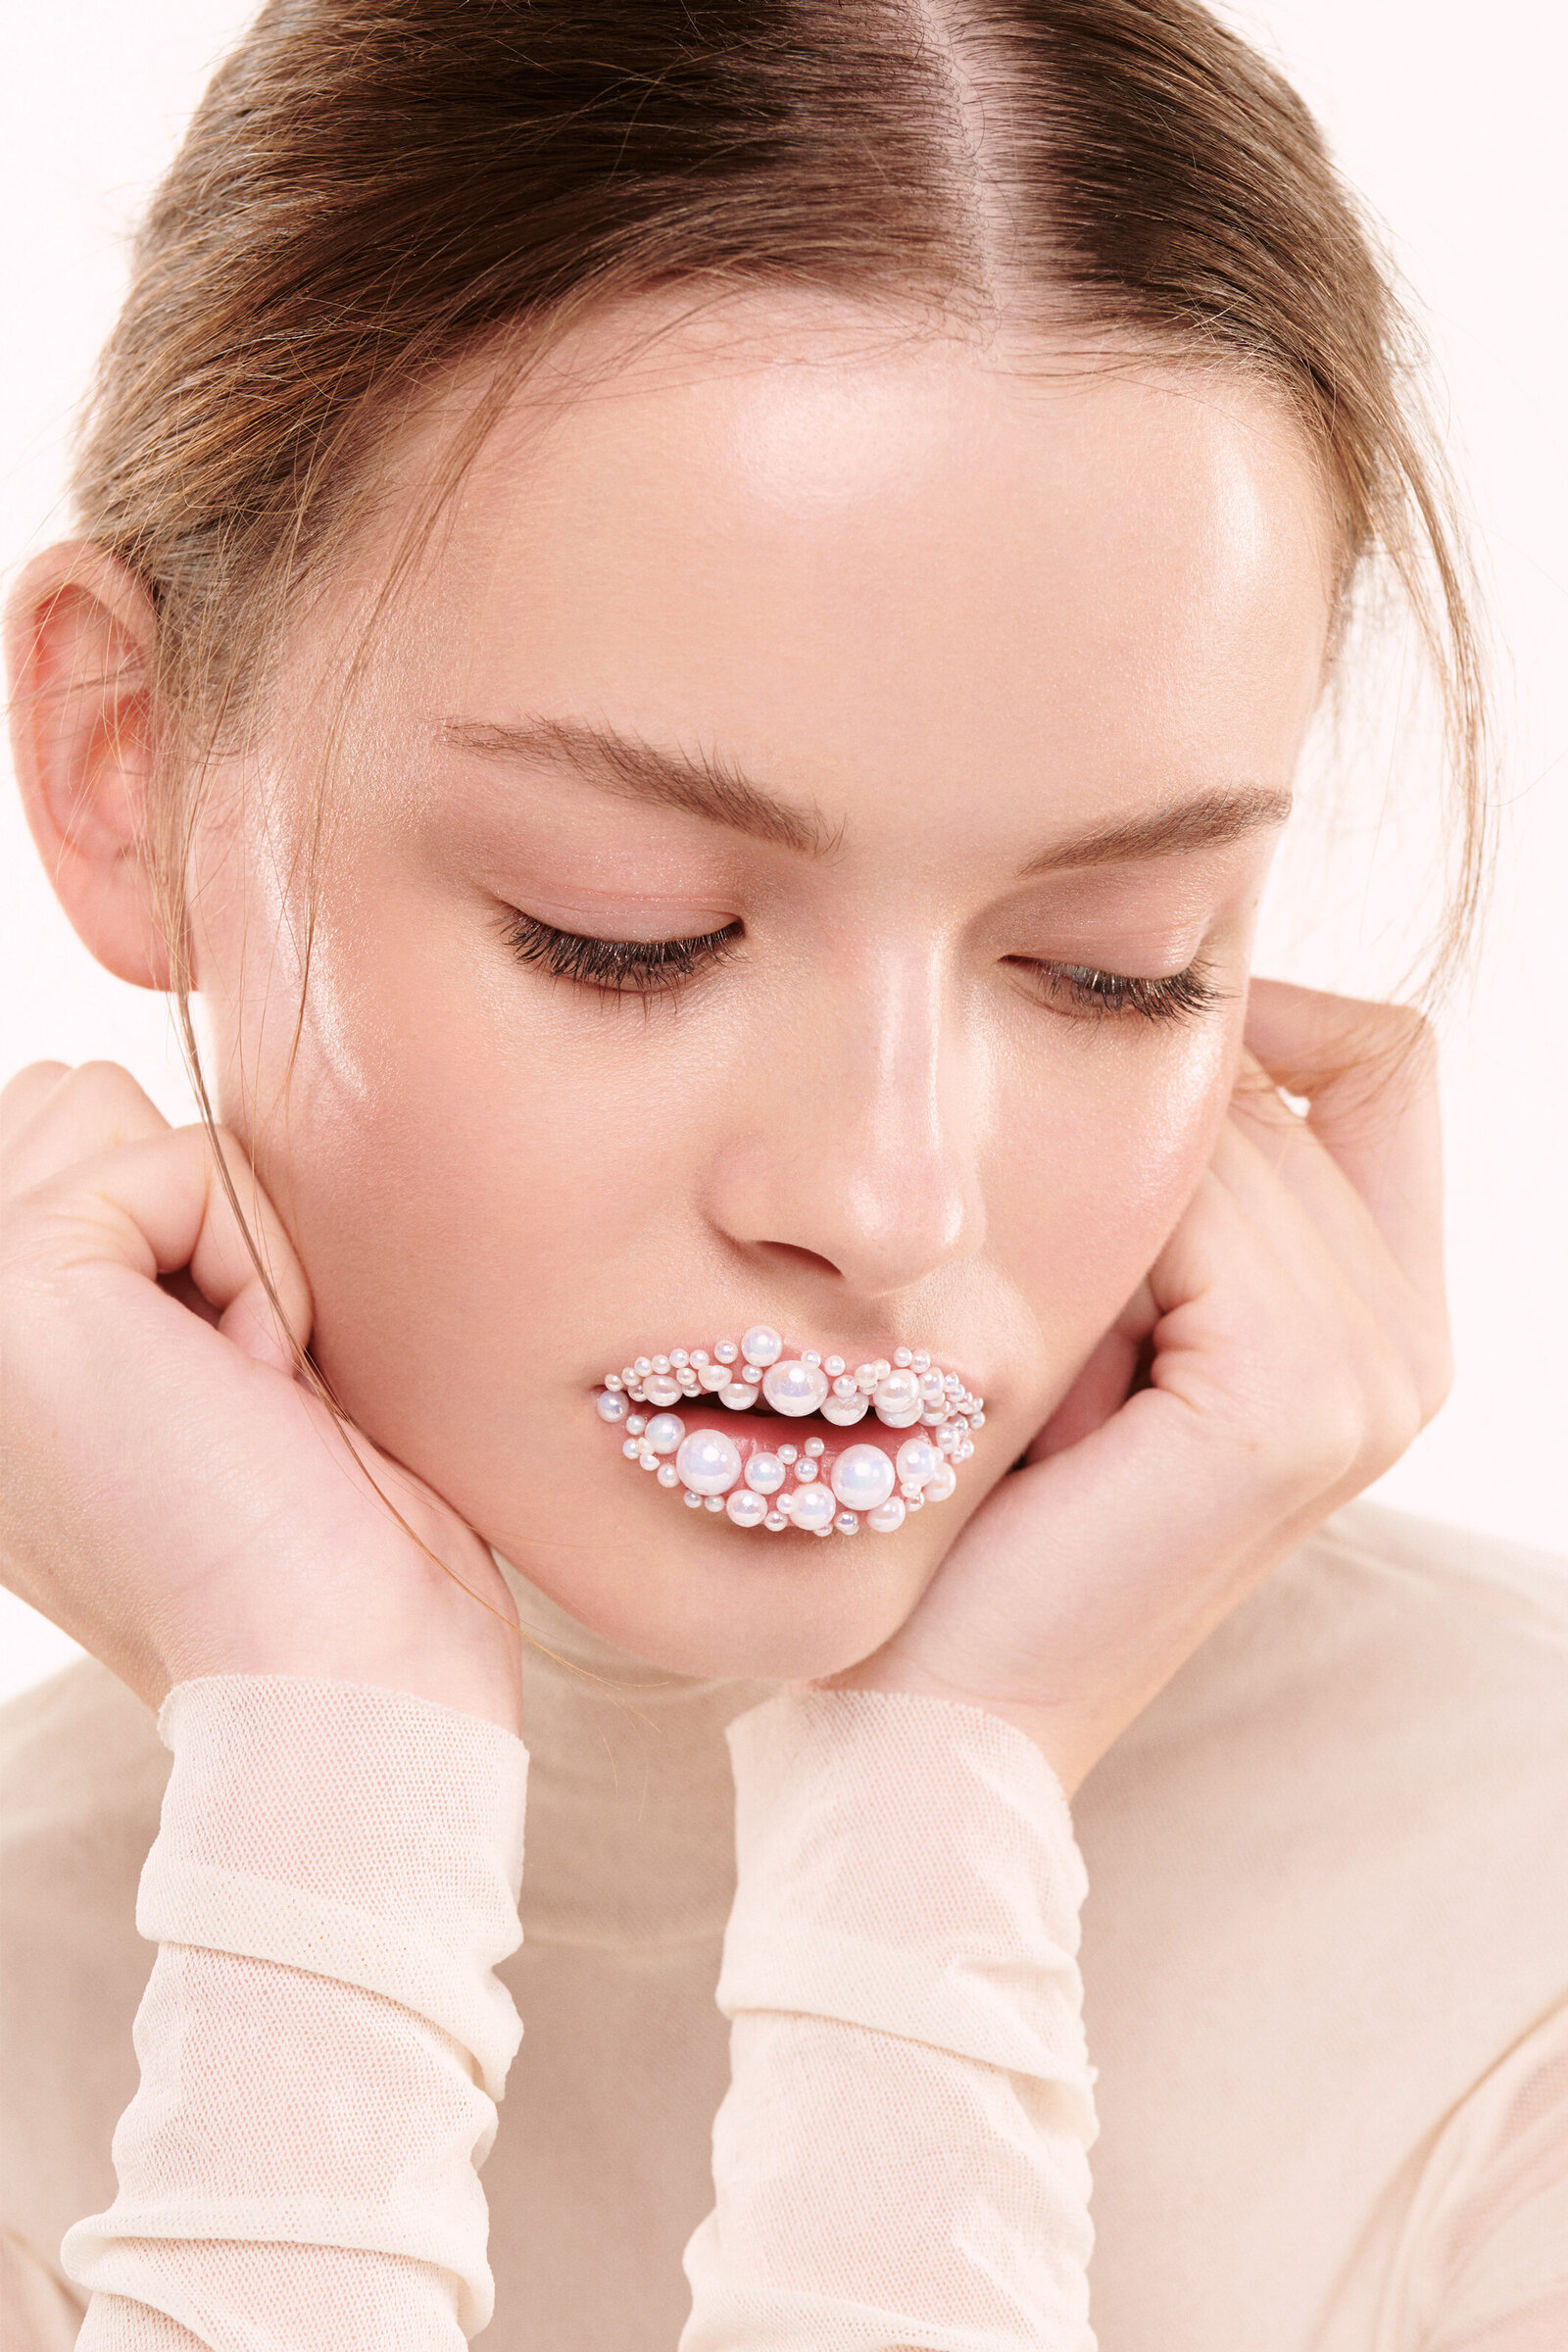 Sfumato-make-up--Comopolitan-beauty-editorial-pearls-3